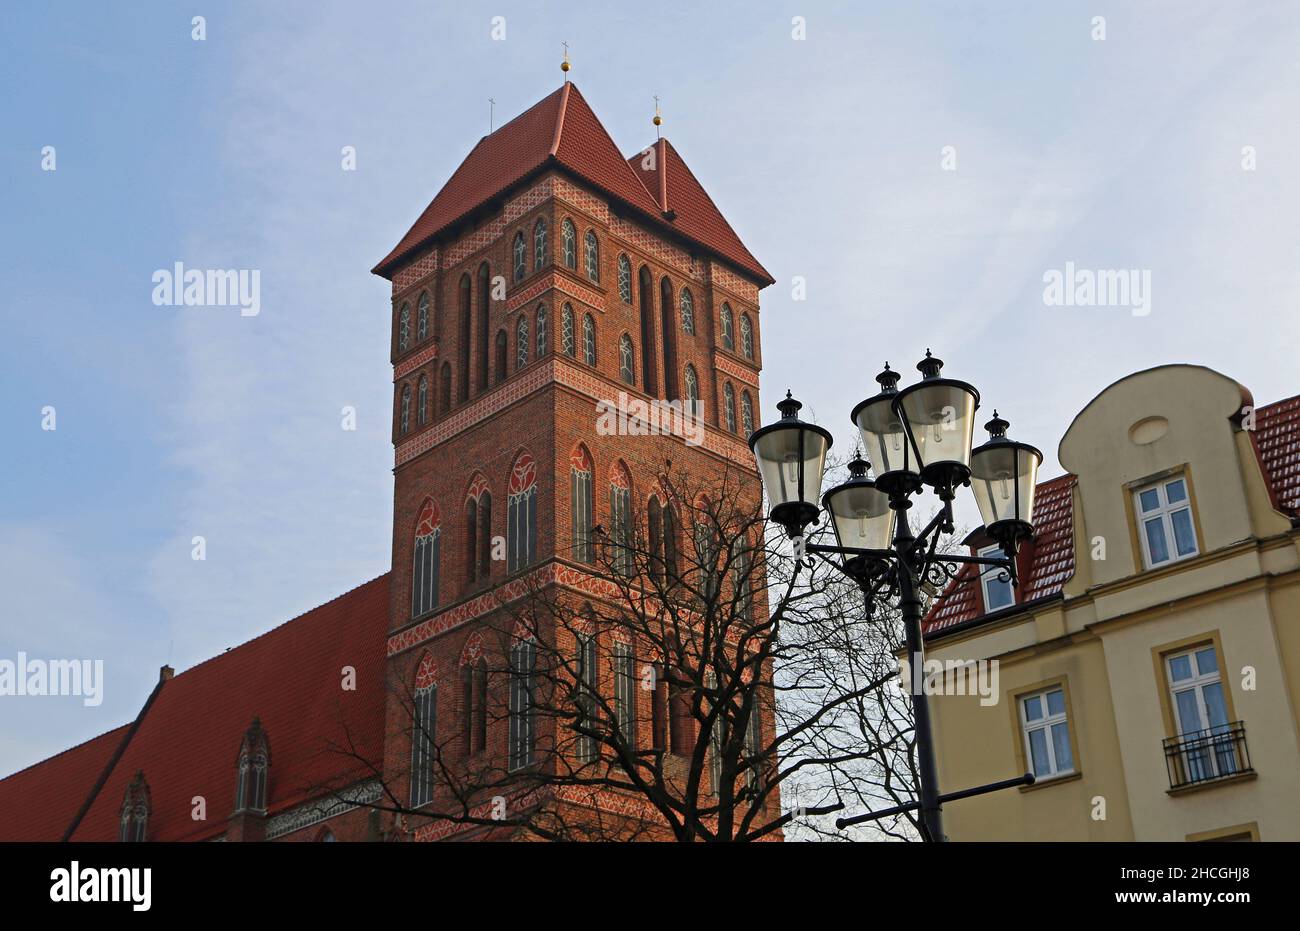 The tower and the lantern - Saint Jacob's Church - Torun, Poland Stock Photo